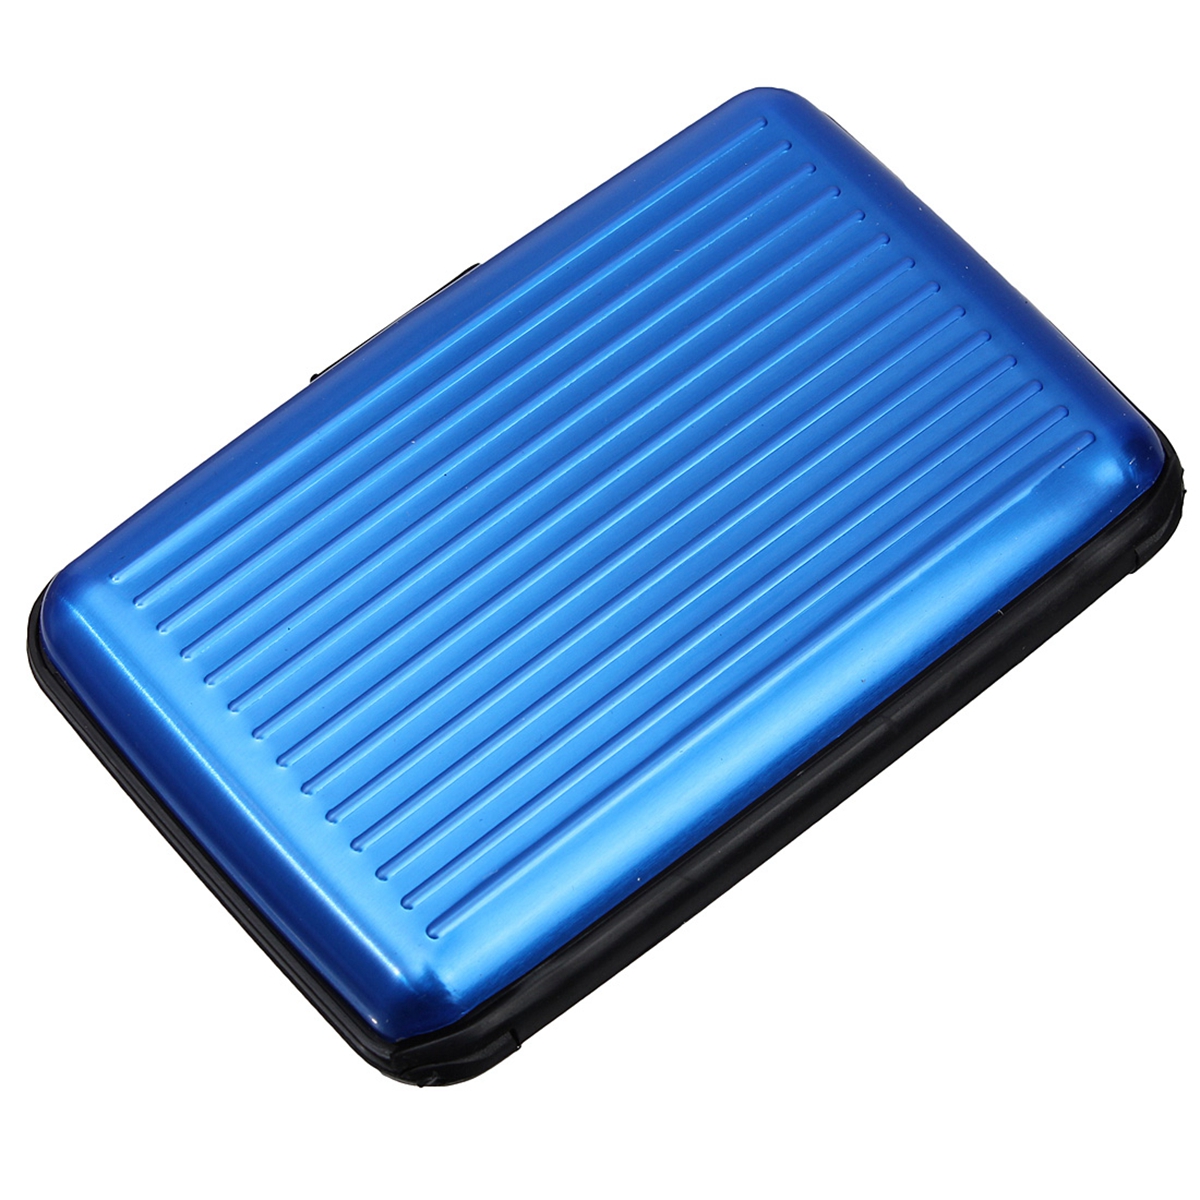 Waterproof Business Credit Card Holder Case Wallet Aluminum Plastic Pocket Box | eBay